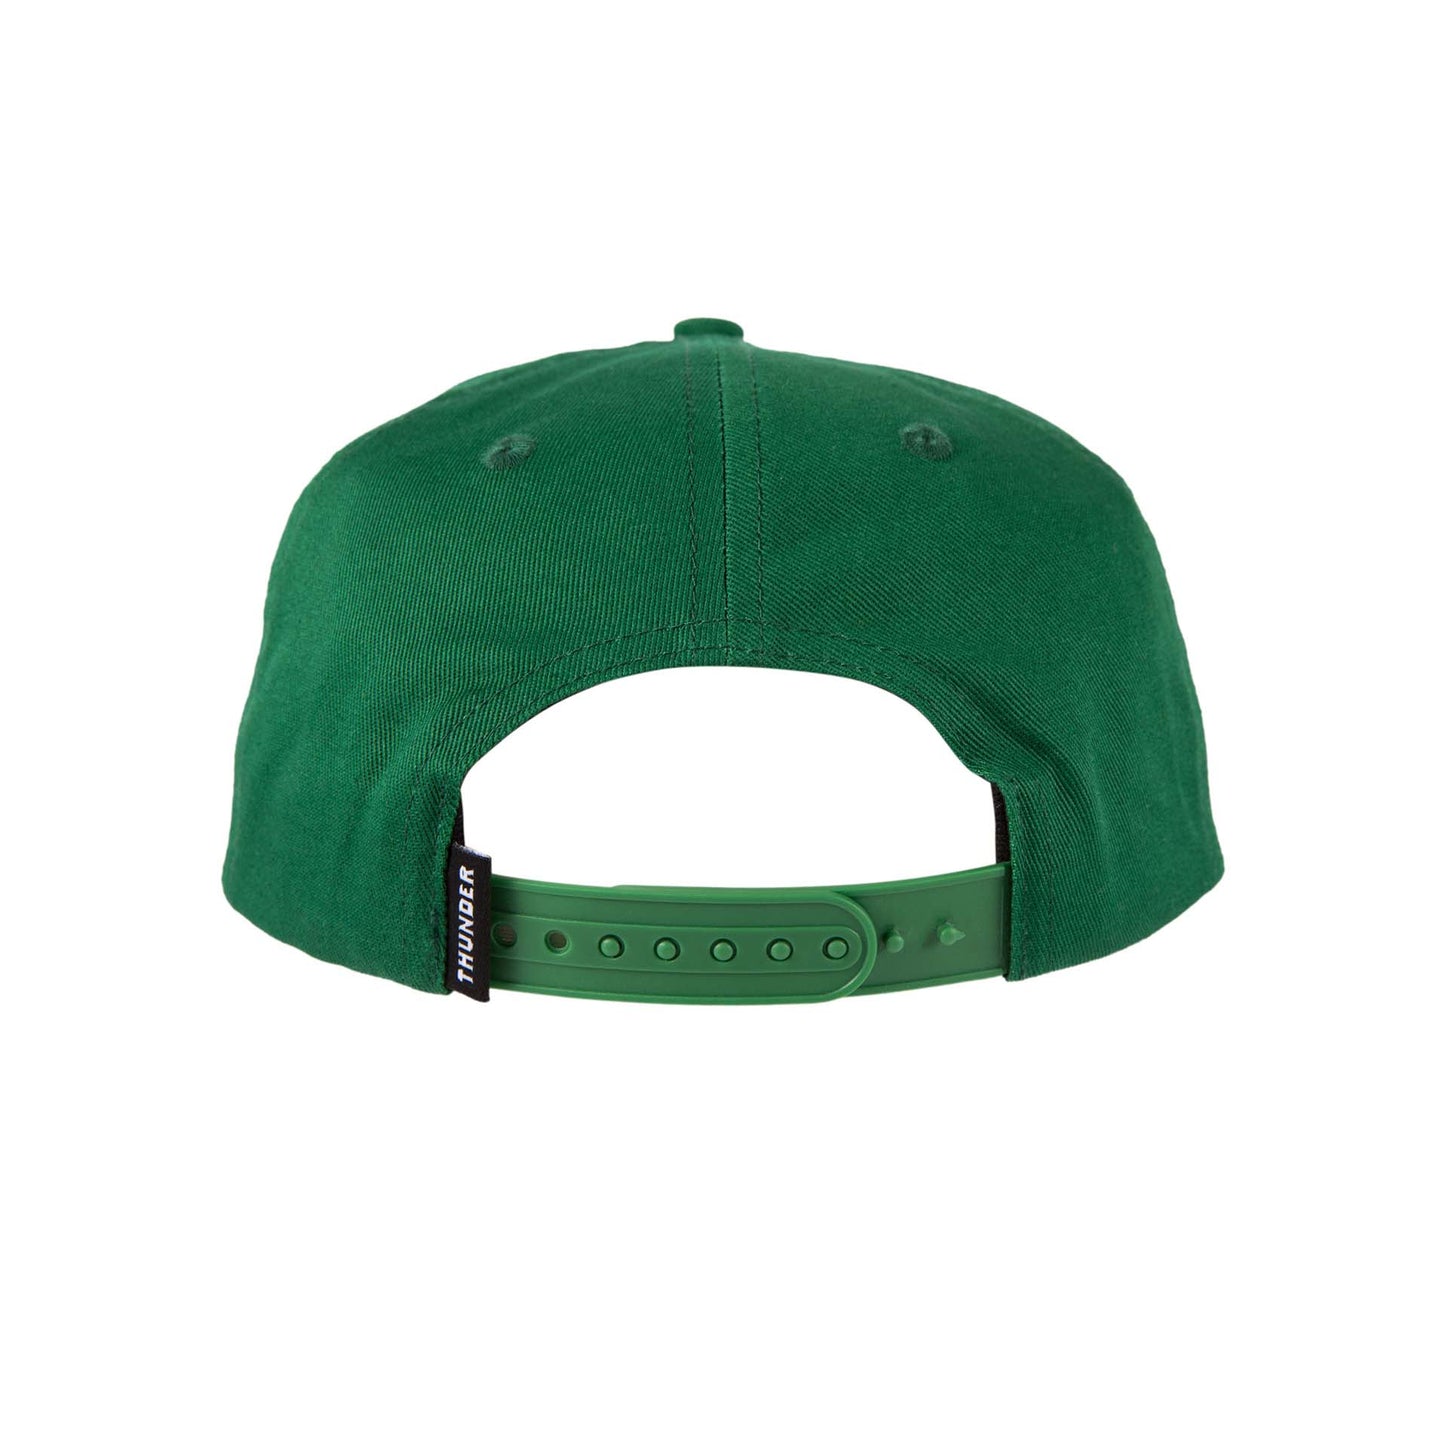 THUNDER - CHARGED GRENADE ADJUSTABLE CAP - GREEN